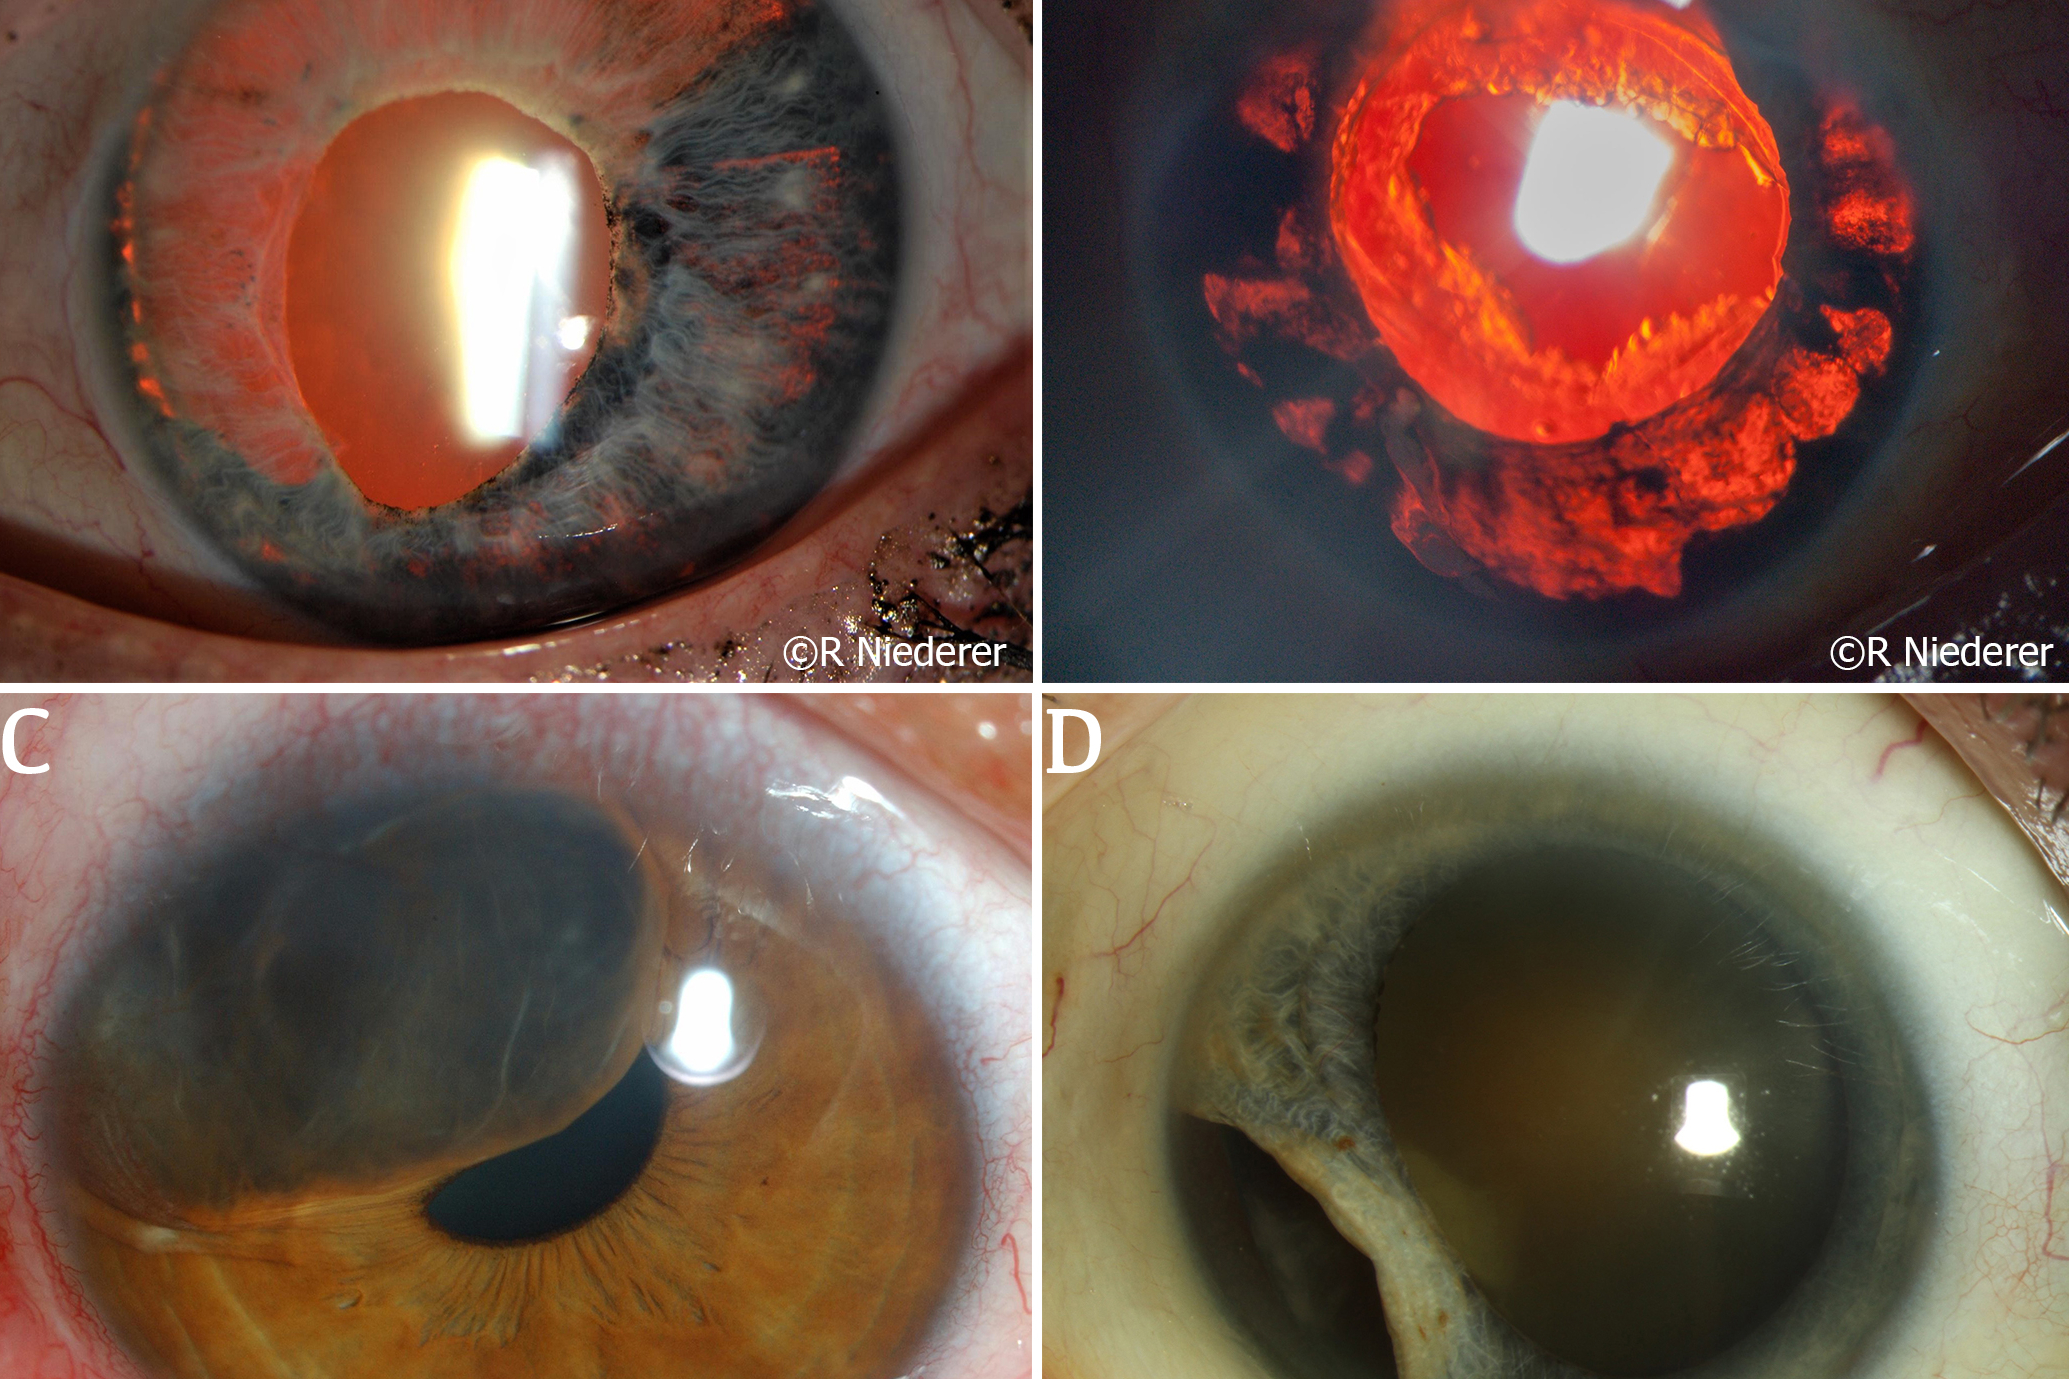 The iris in health and disease, part II: Iris transillumination defects and rubeosis iridis